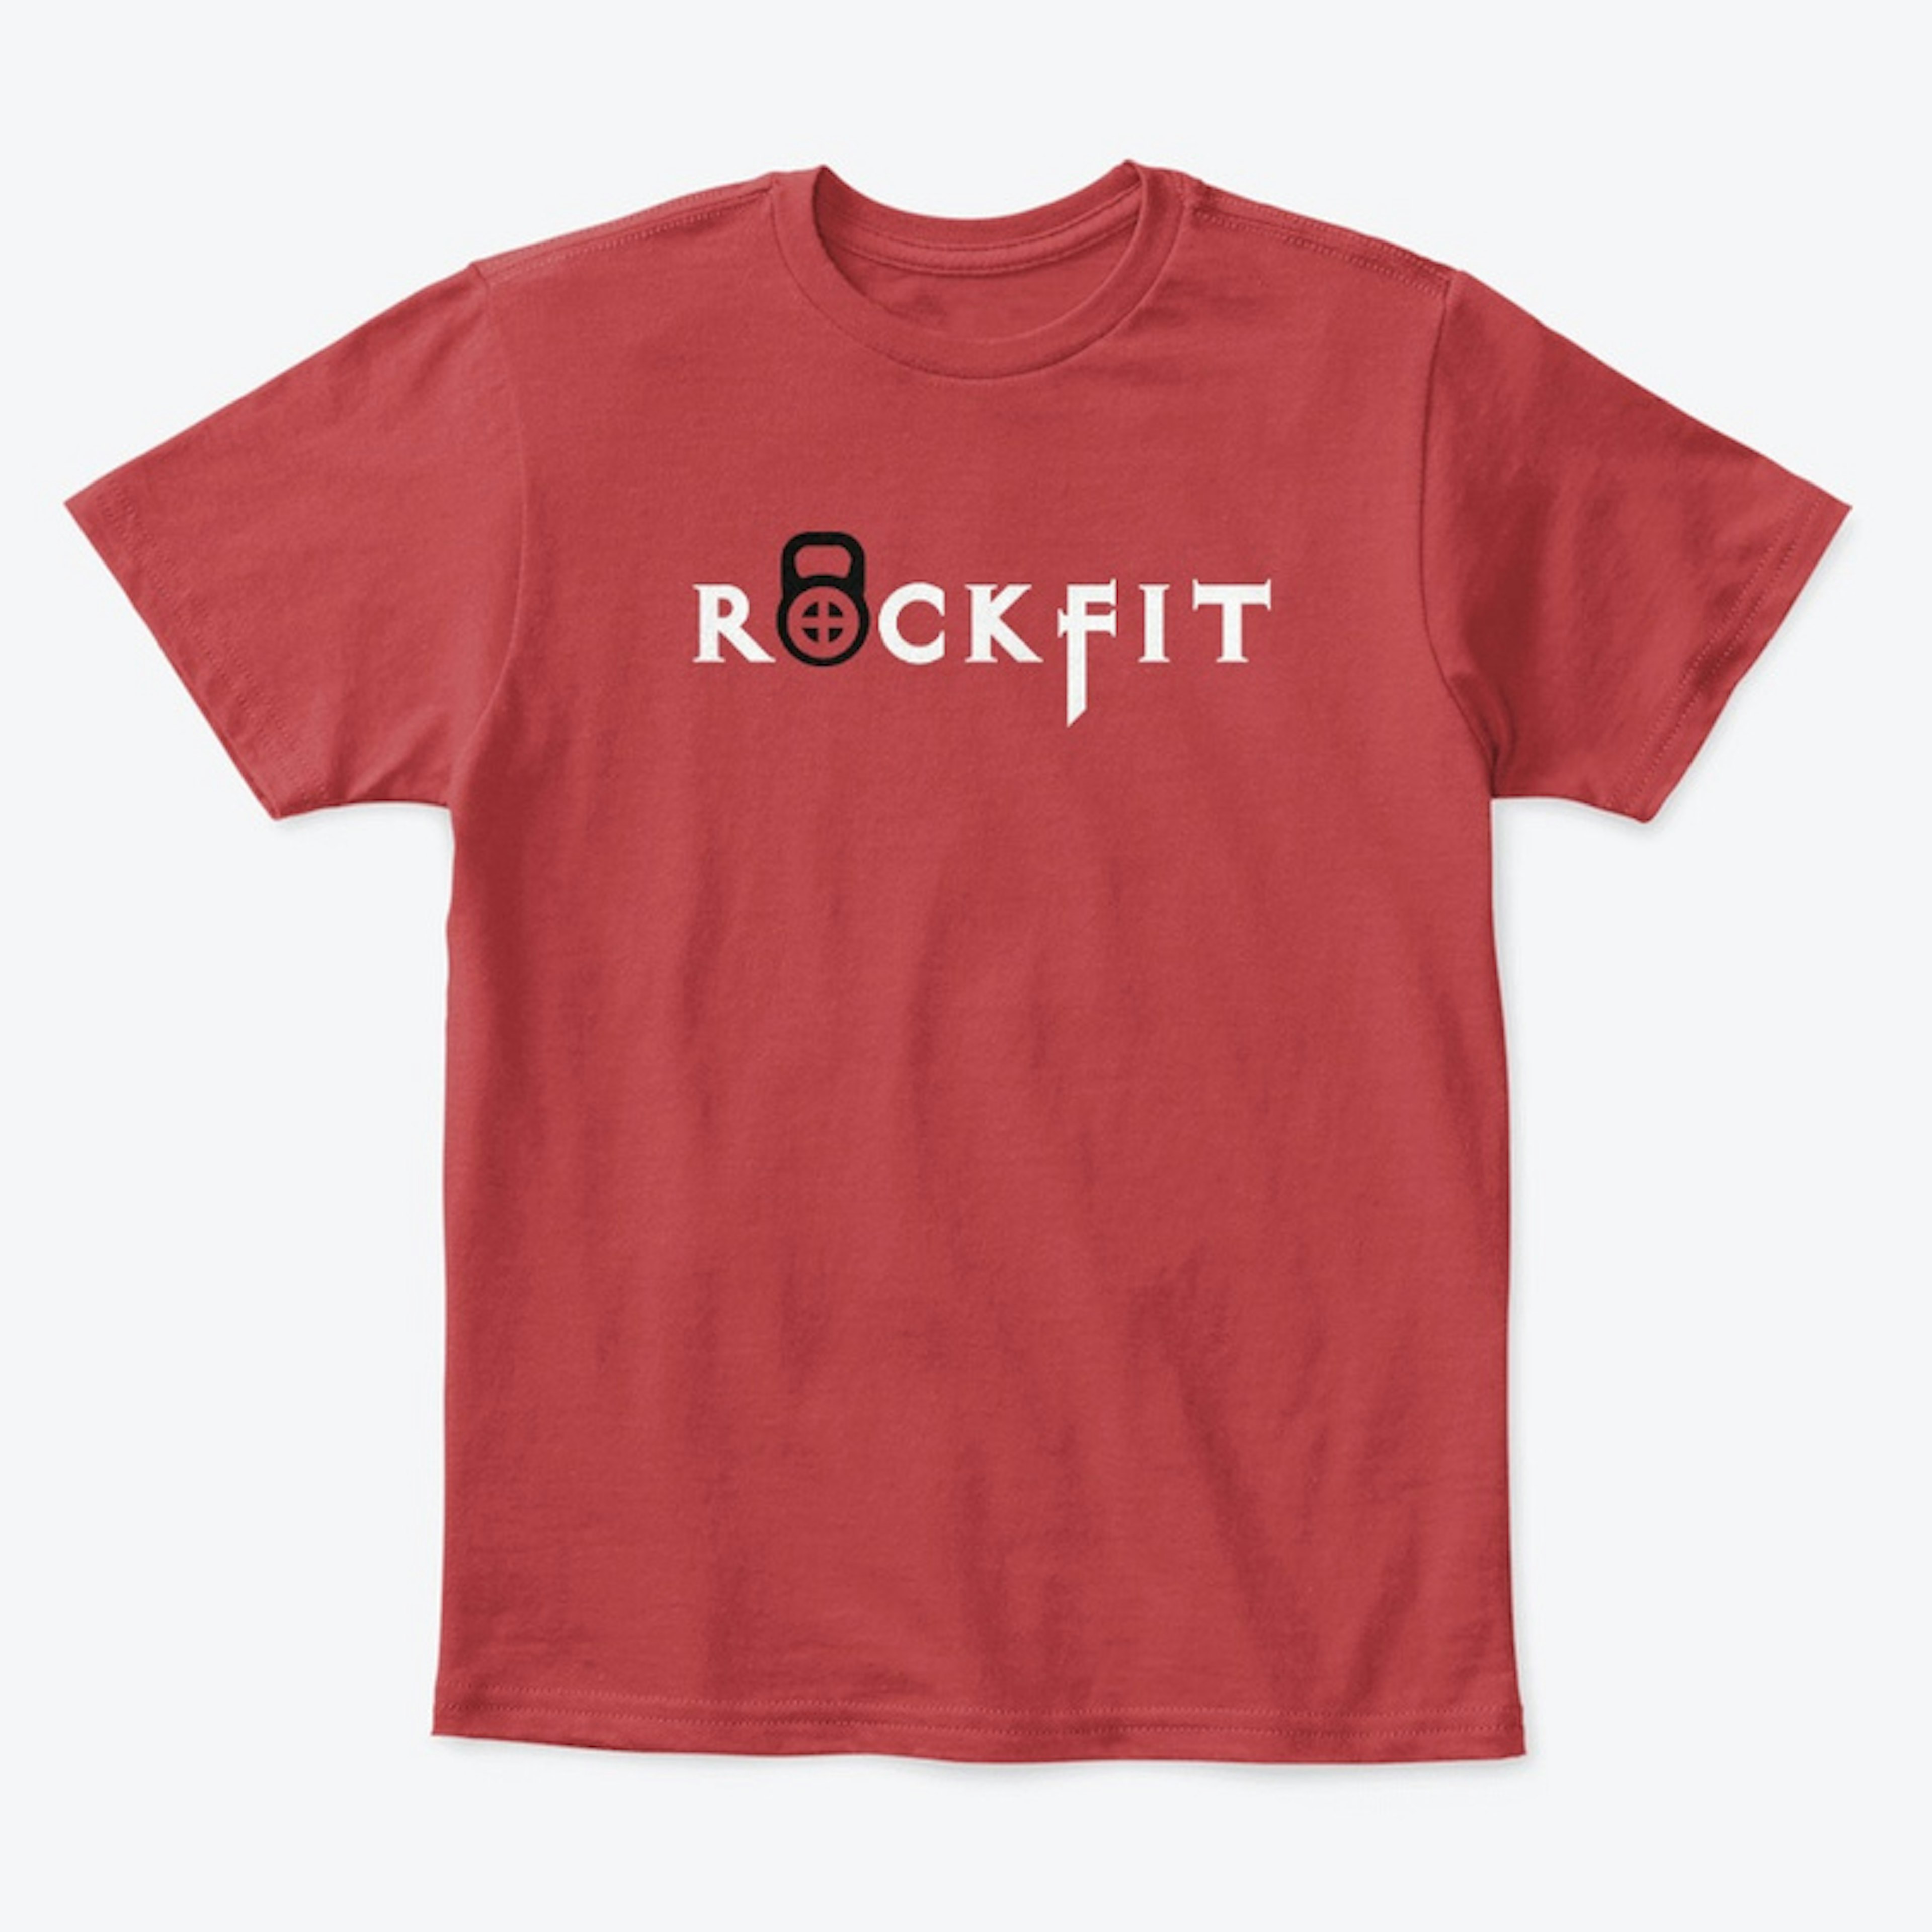 Rockfit Kid's Red Shirt